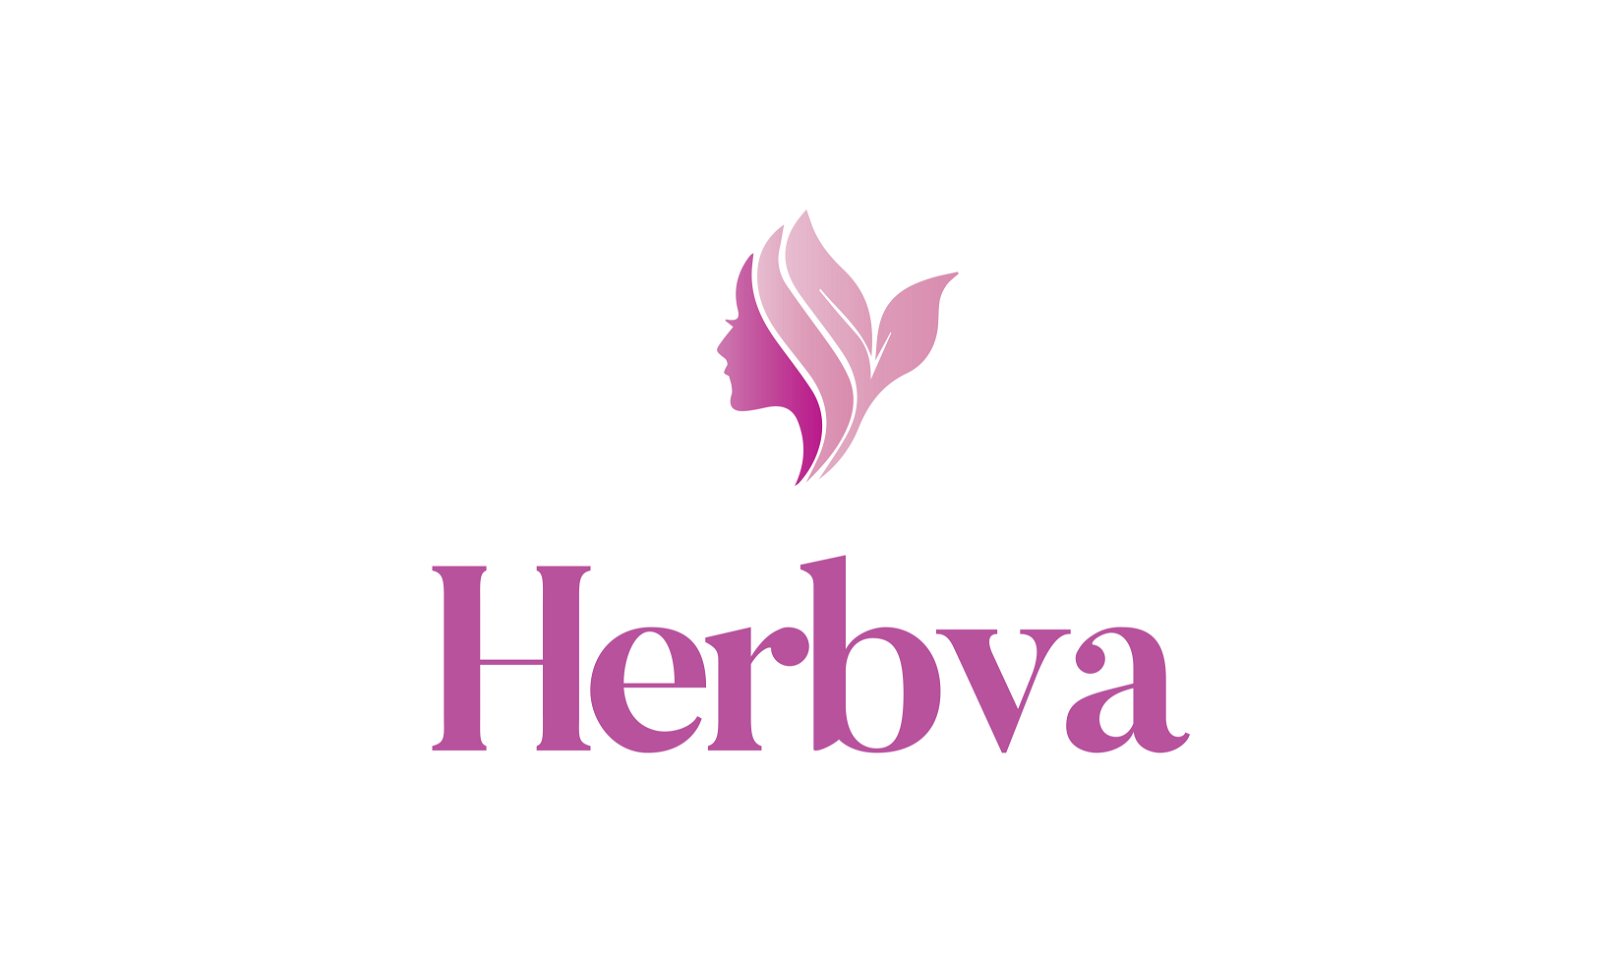 Herbva.com - Creative brandable domain for sale